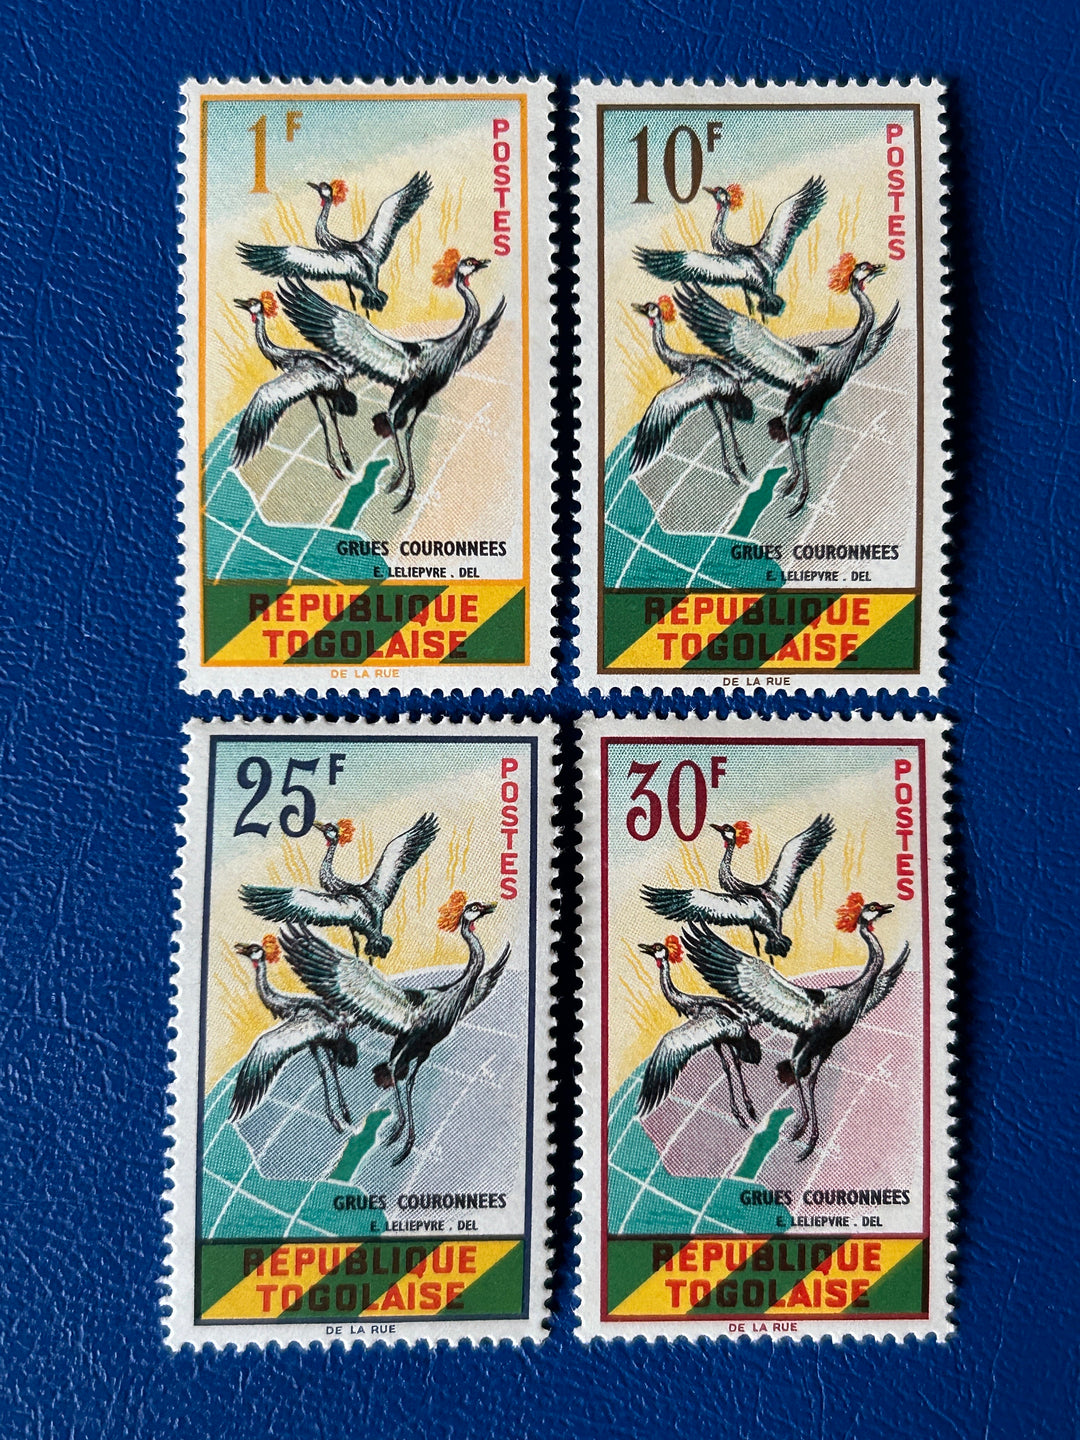 Togo - Original Vintage Postage Stamps- 1961 - Crown Cranes over Map - for the collector, artist or crafter